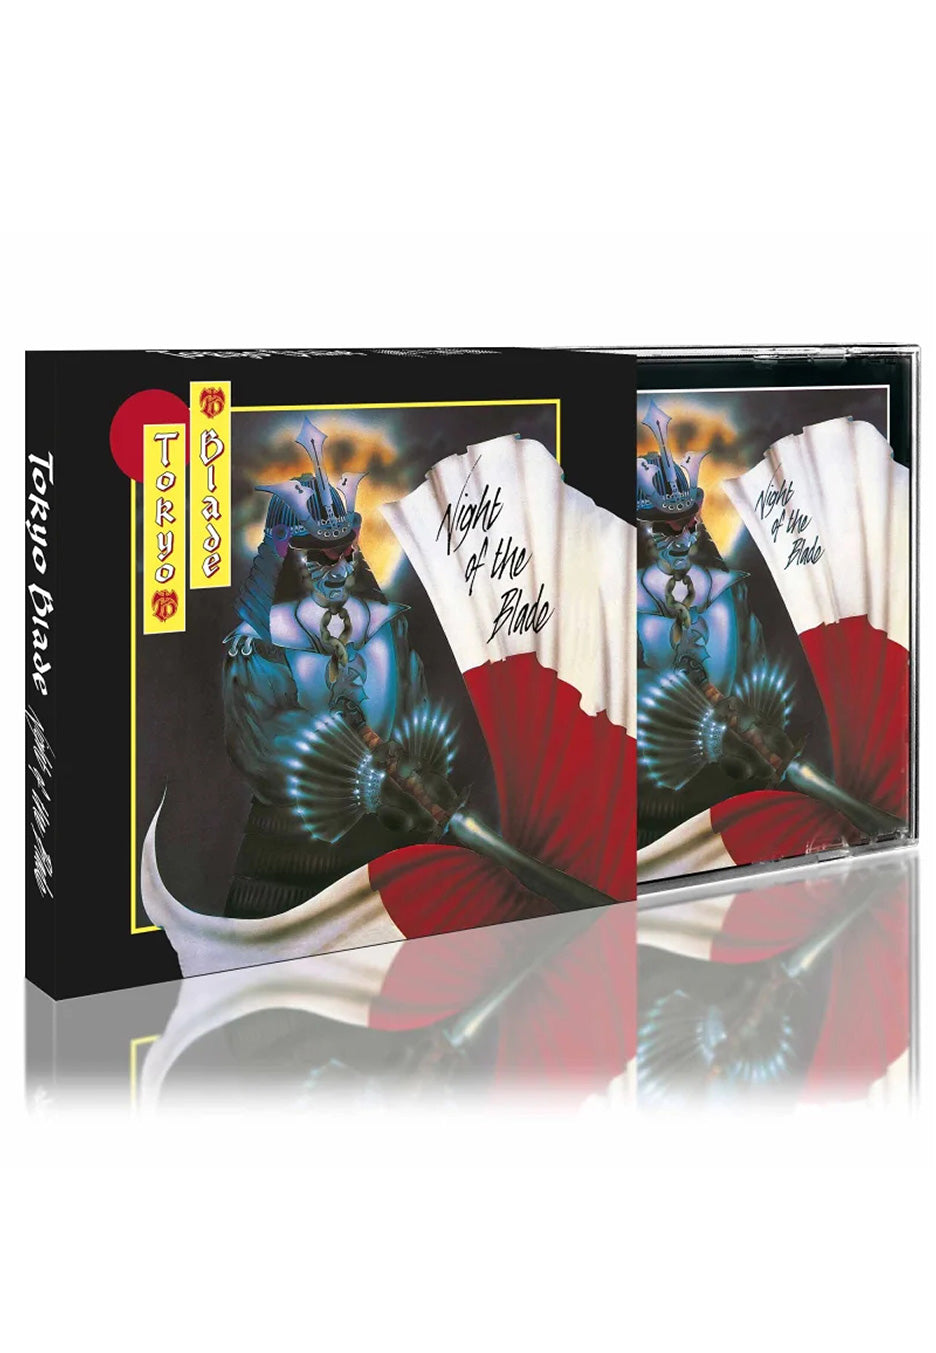 Tokyo Blade - Night Of The Blade - CD